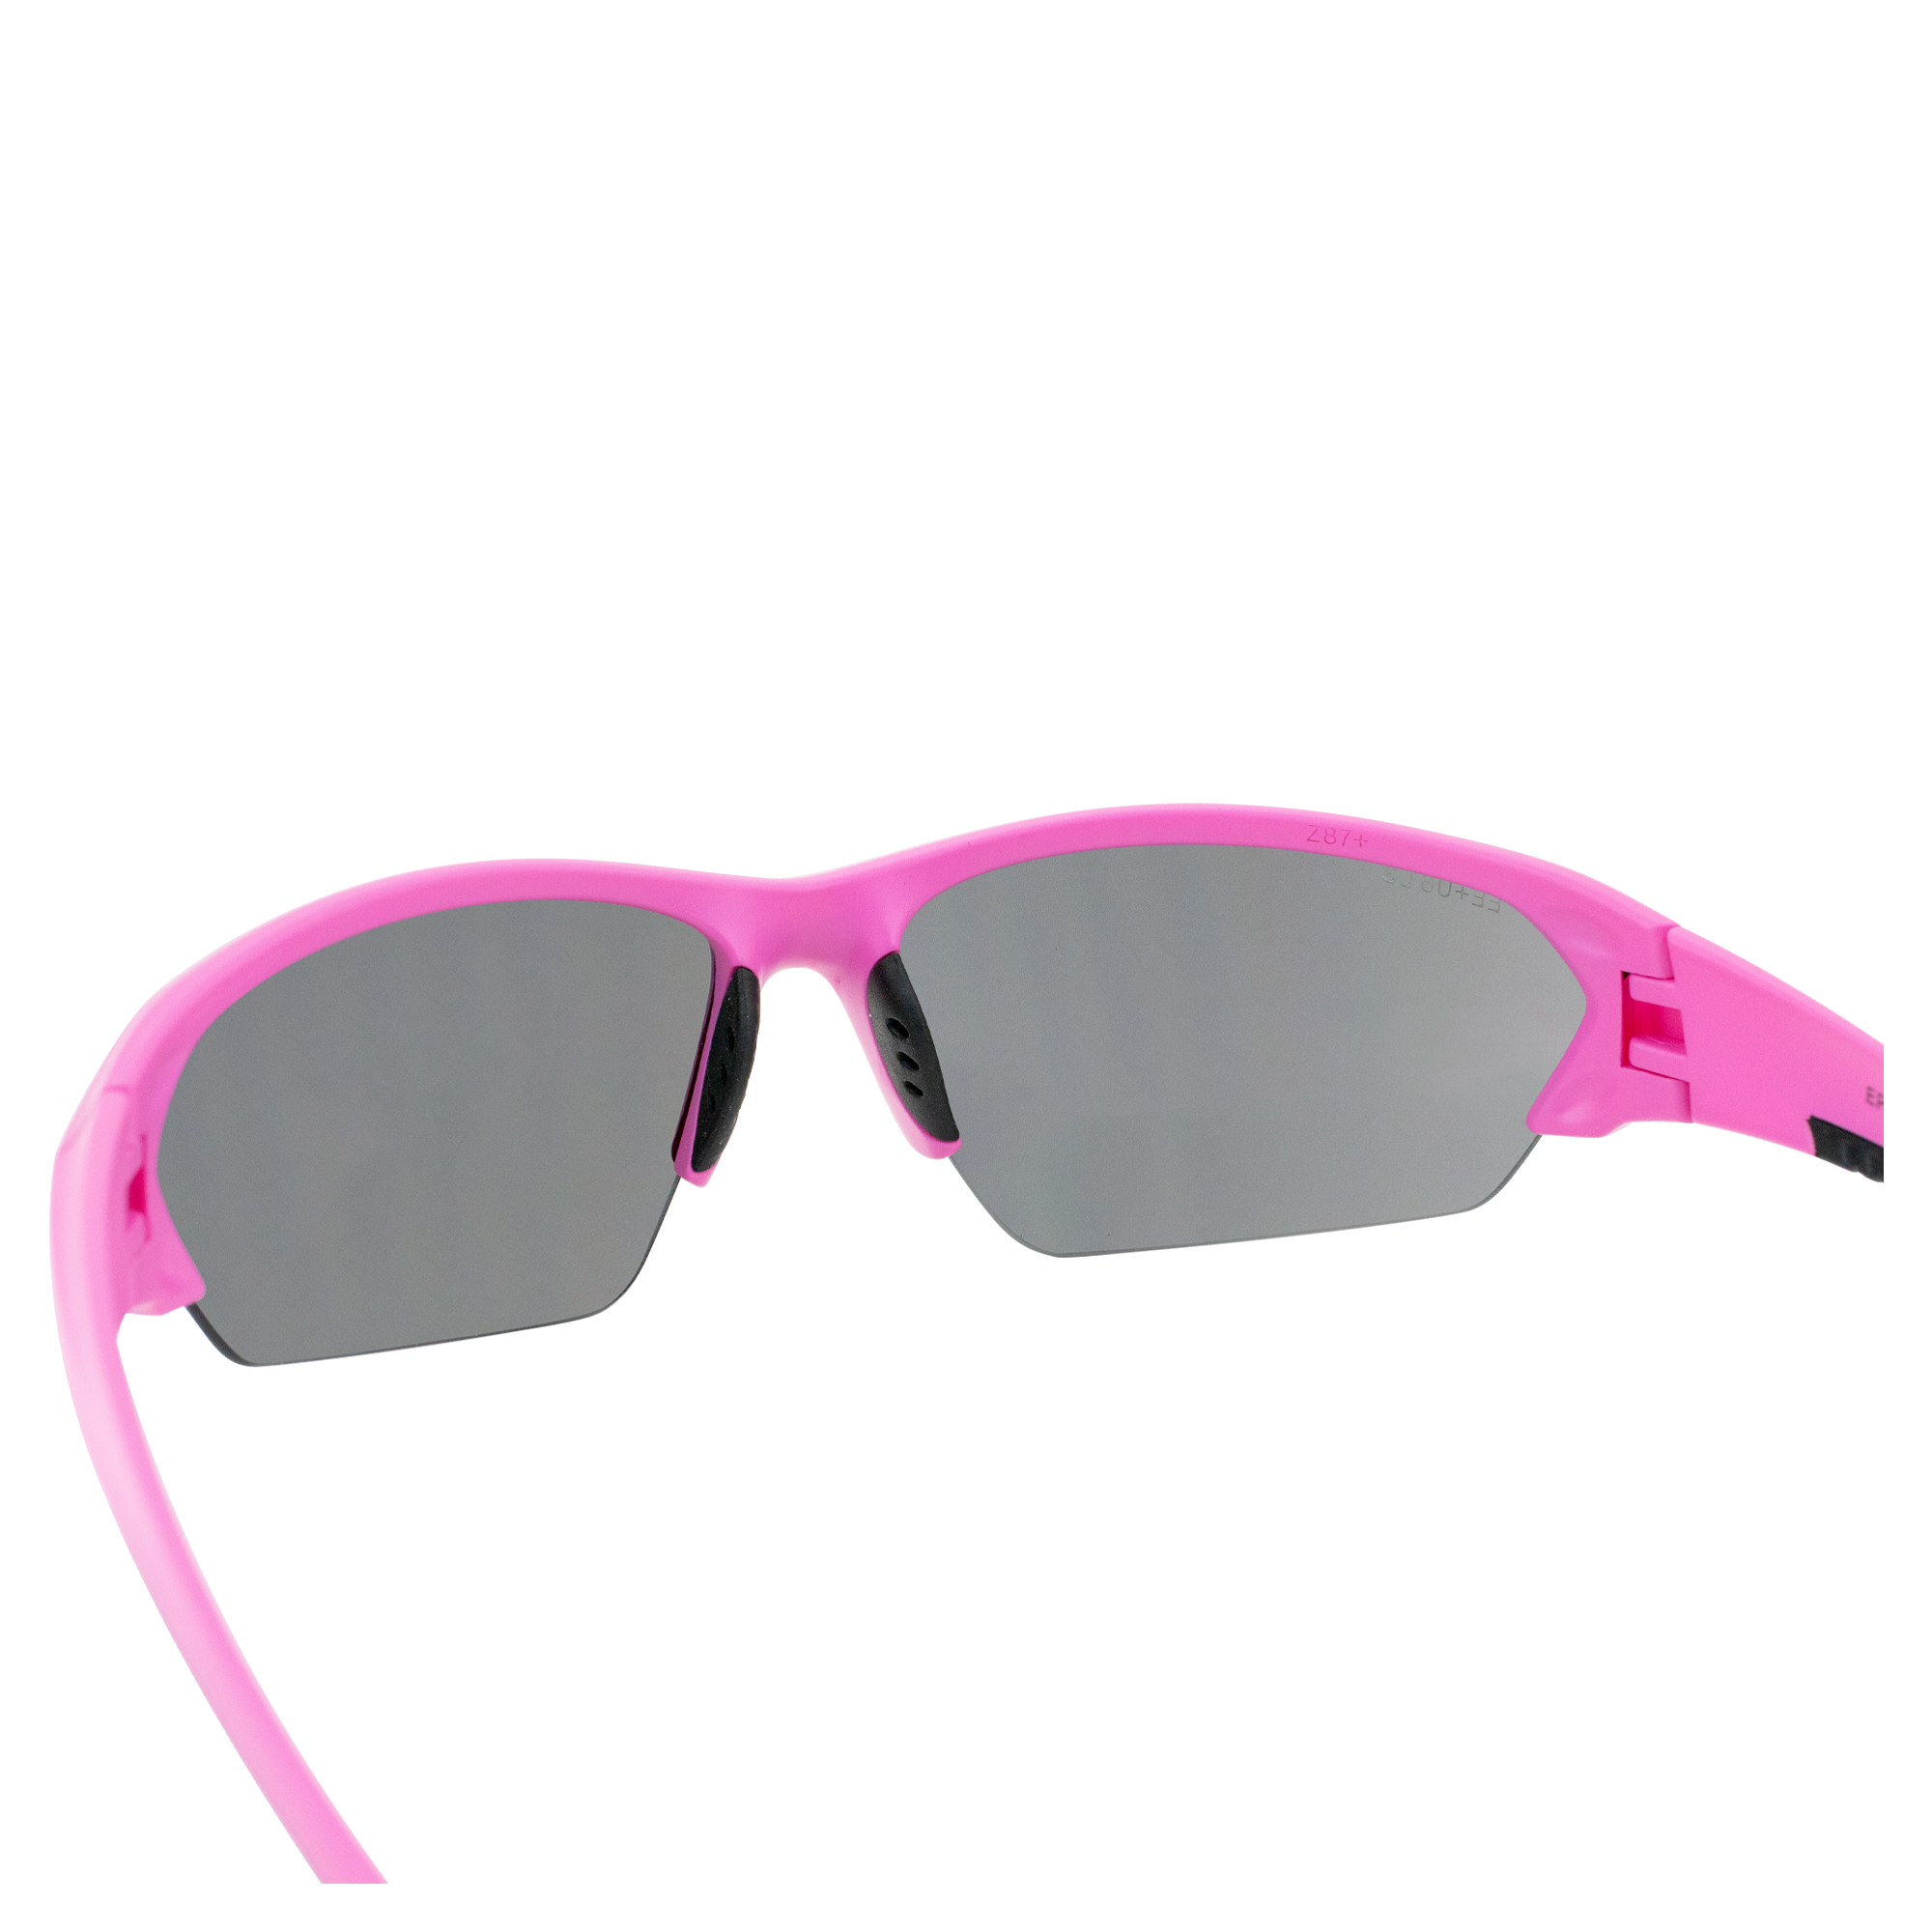 Epoch Eyewear Wake Sunglasses Style Pink with Smoke Lens - image 5 of 8